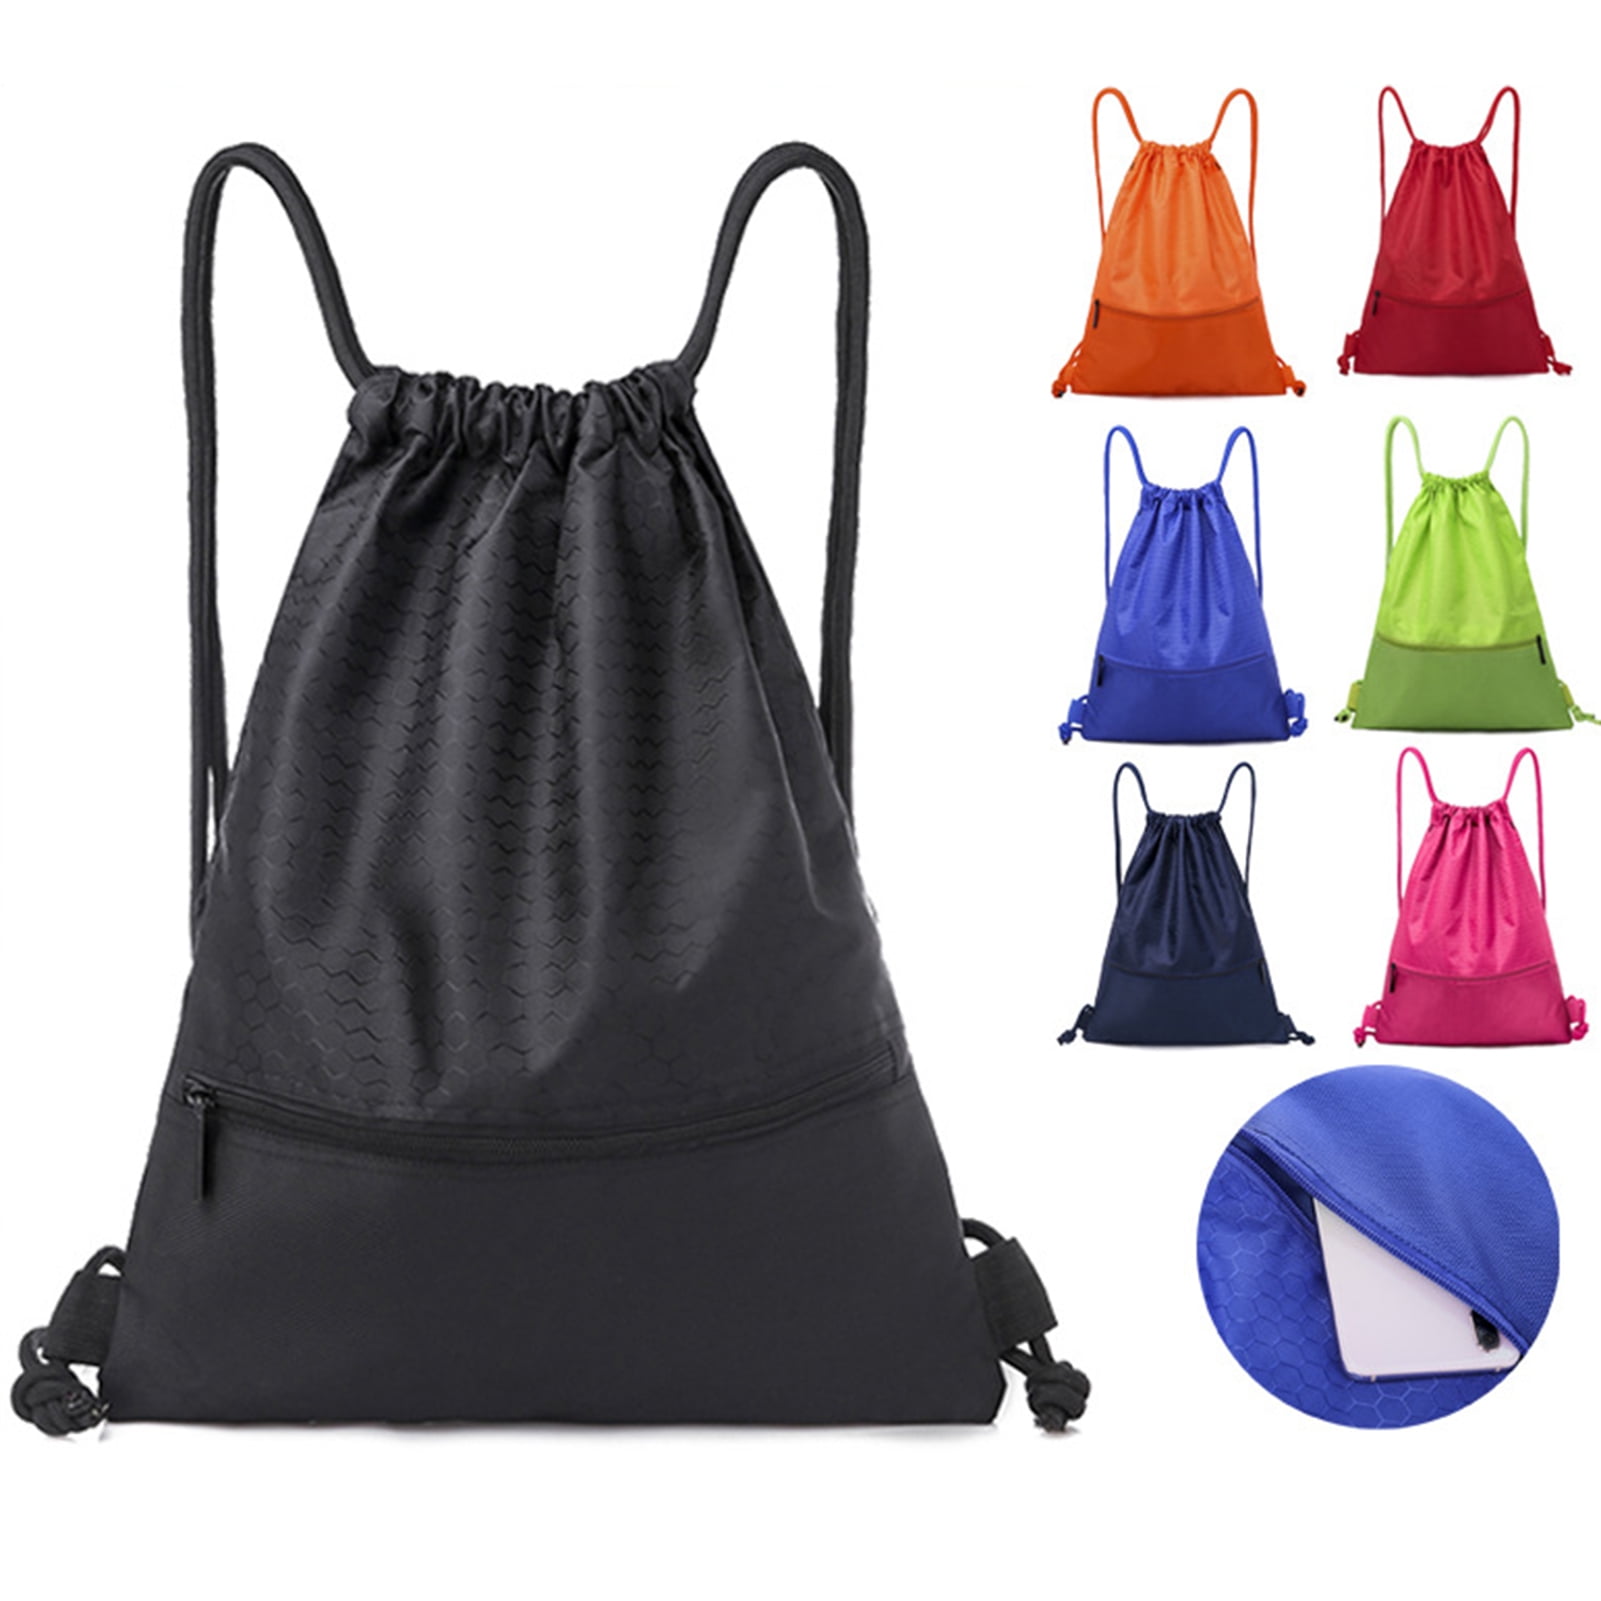 Drawstring Backpack Bulk String Bag Gym Sack Sports Sackpack with Zipper for Men Women Black&Orange, 2PCS 